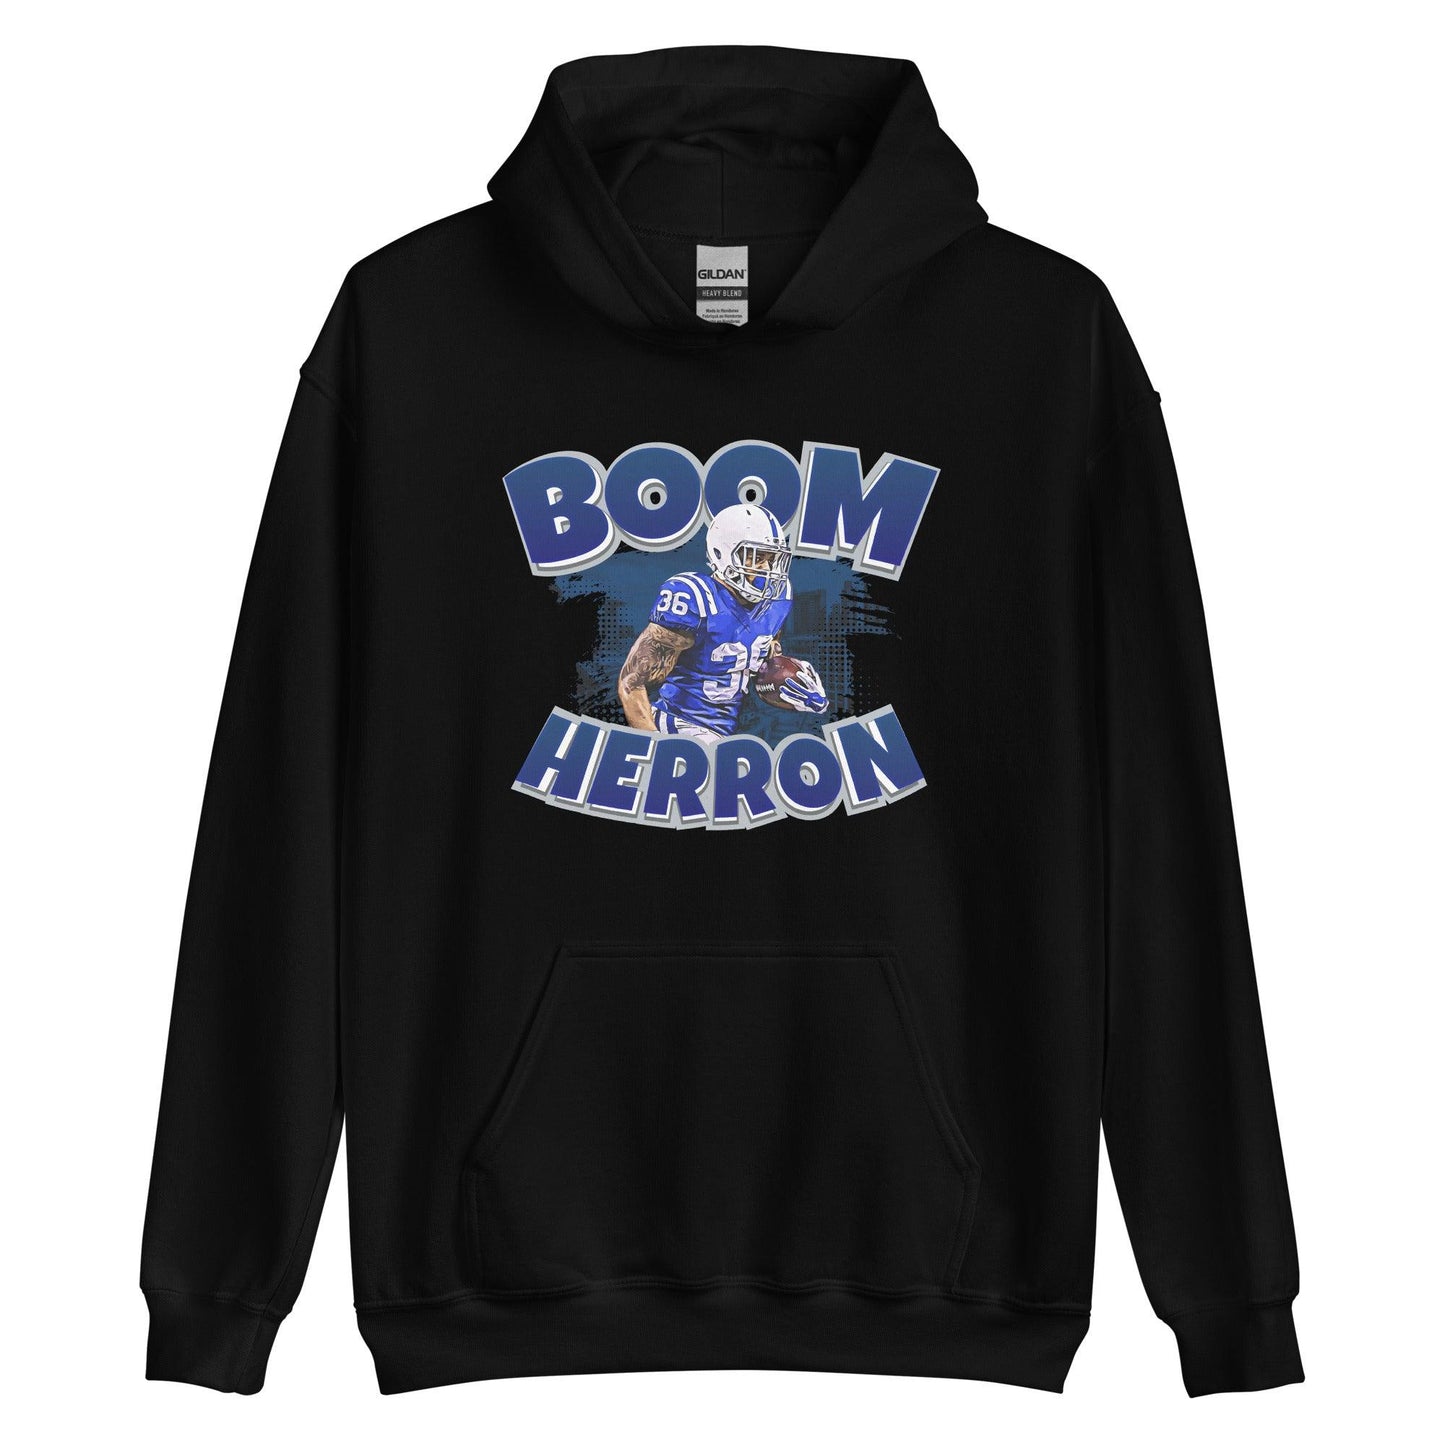 Boom Herron "Gameday" Hoodie - Fan Arch